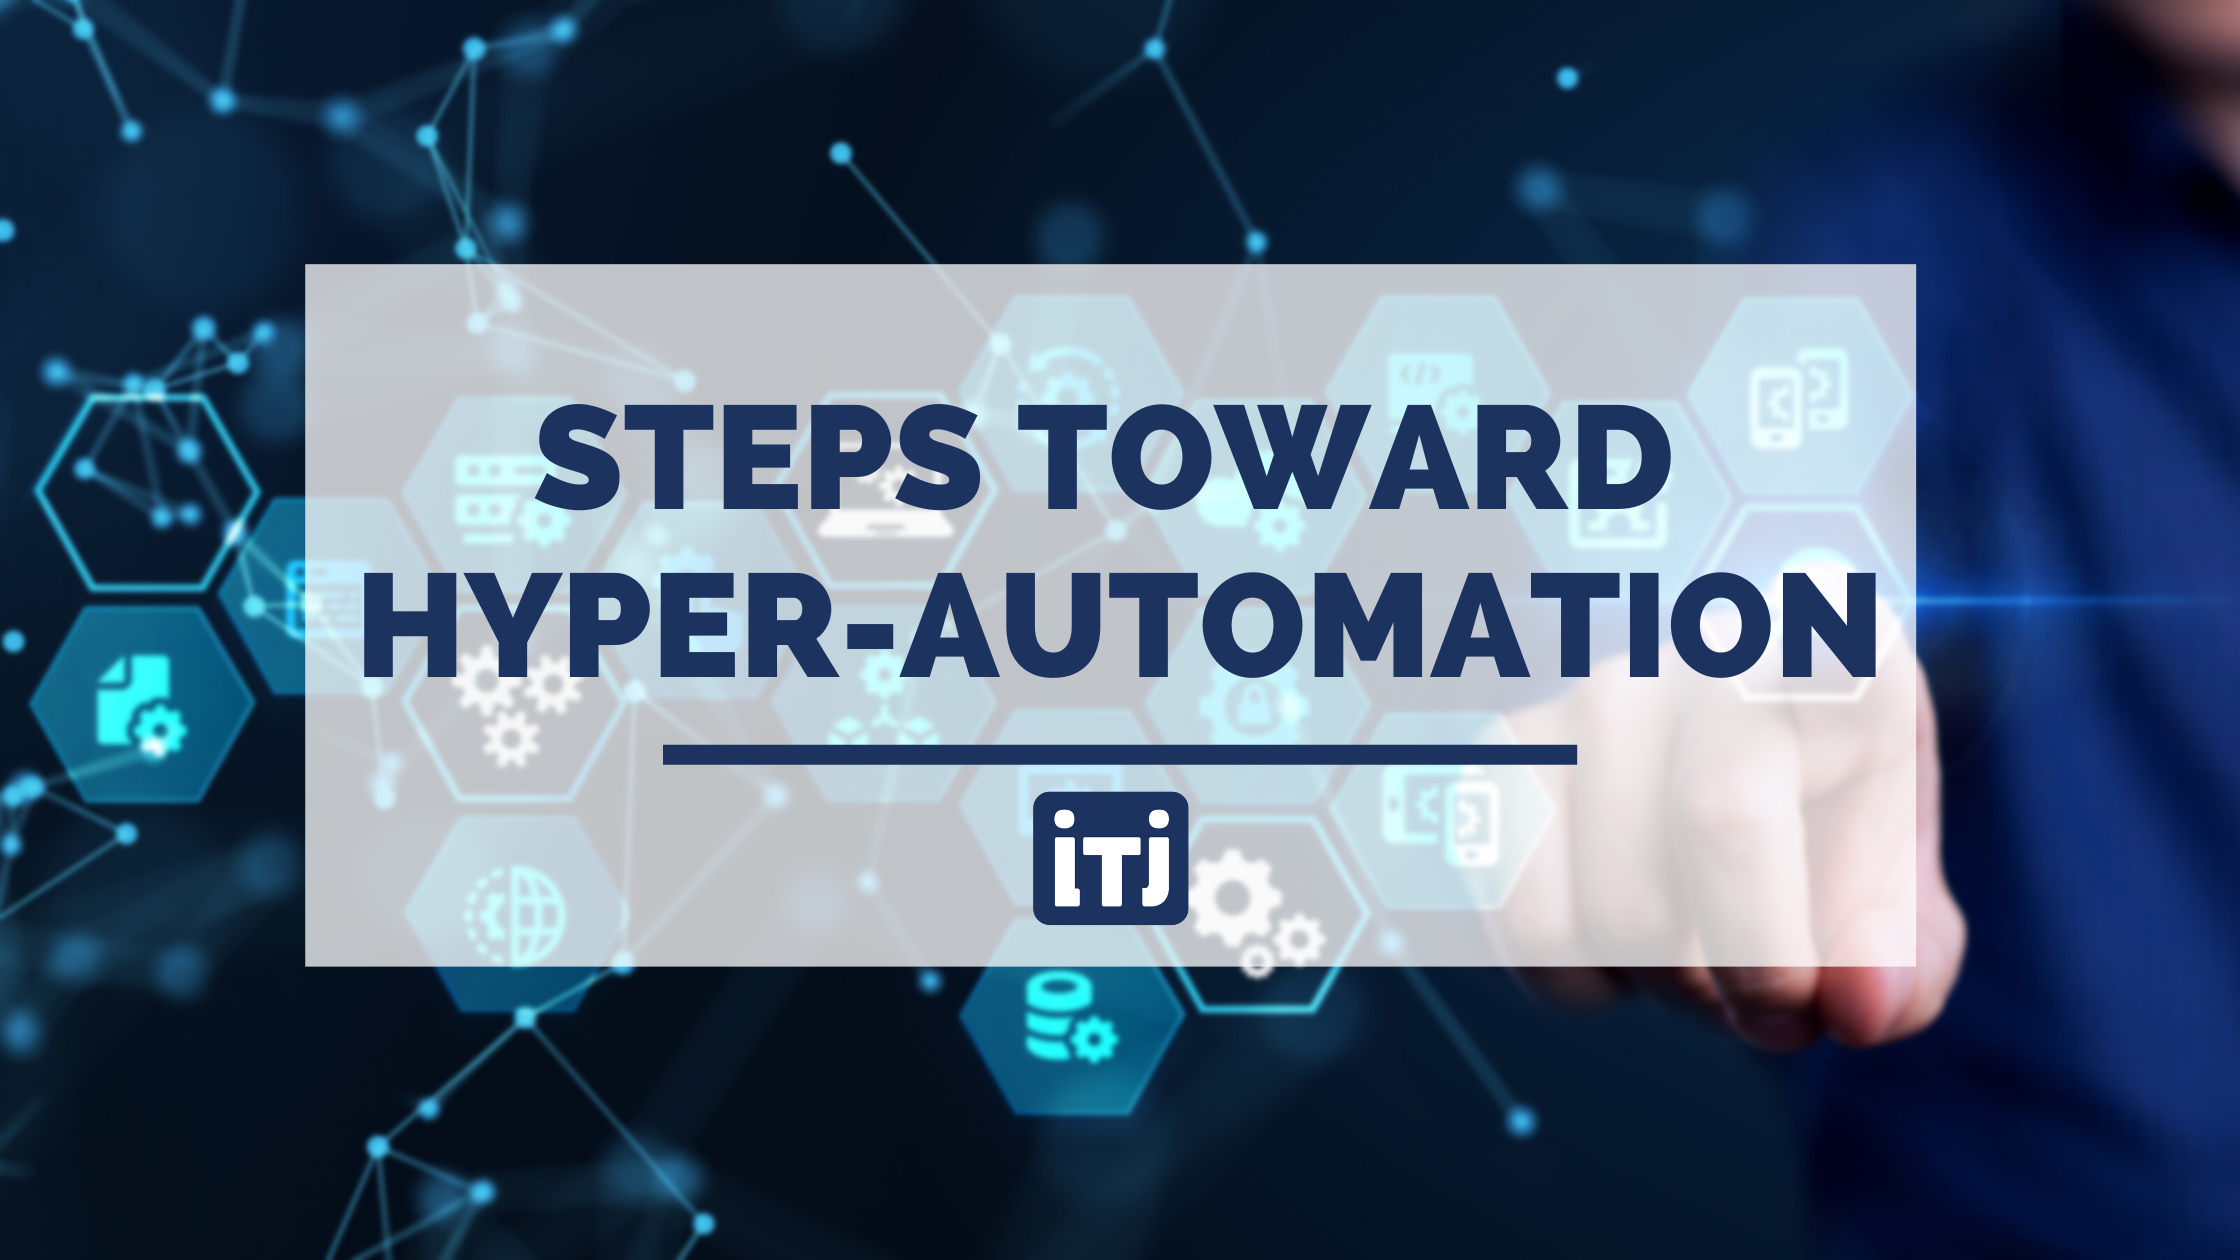 Steps toward hyper-automation